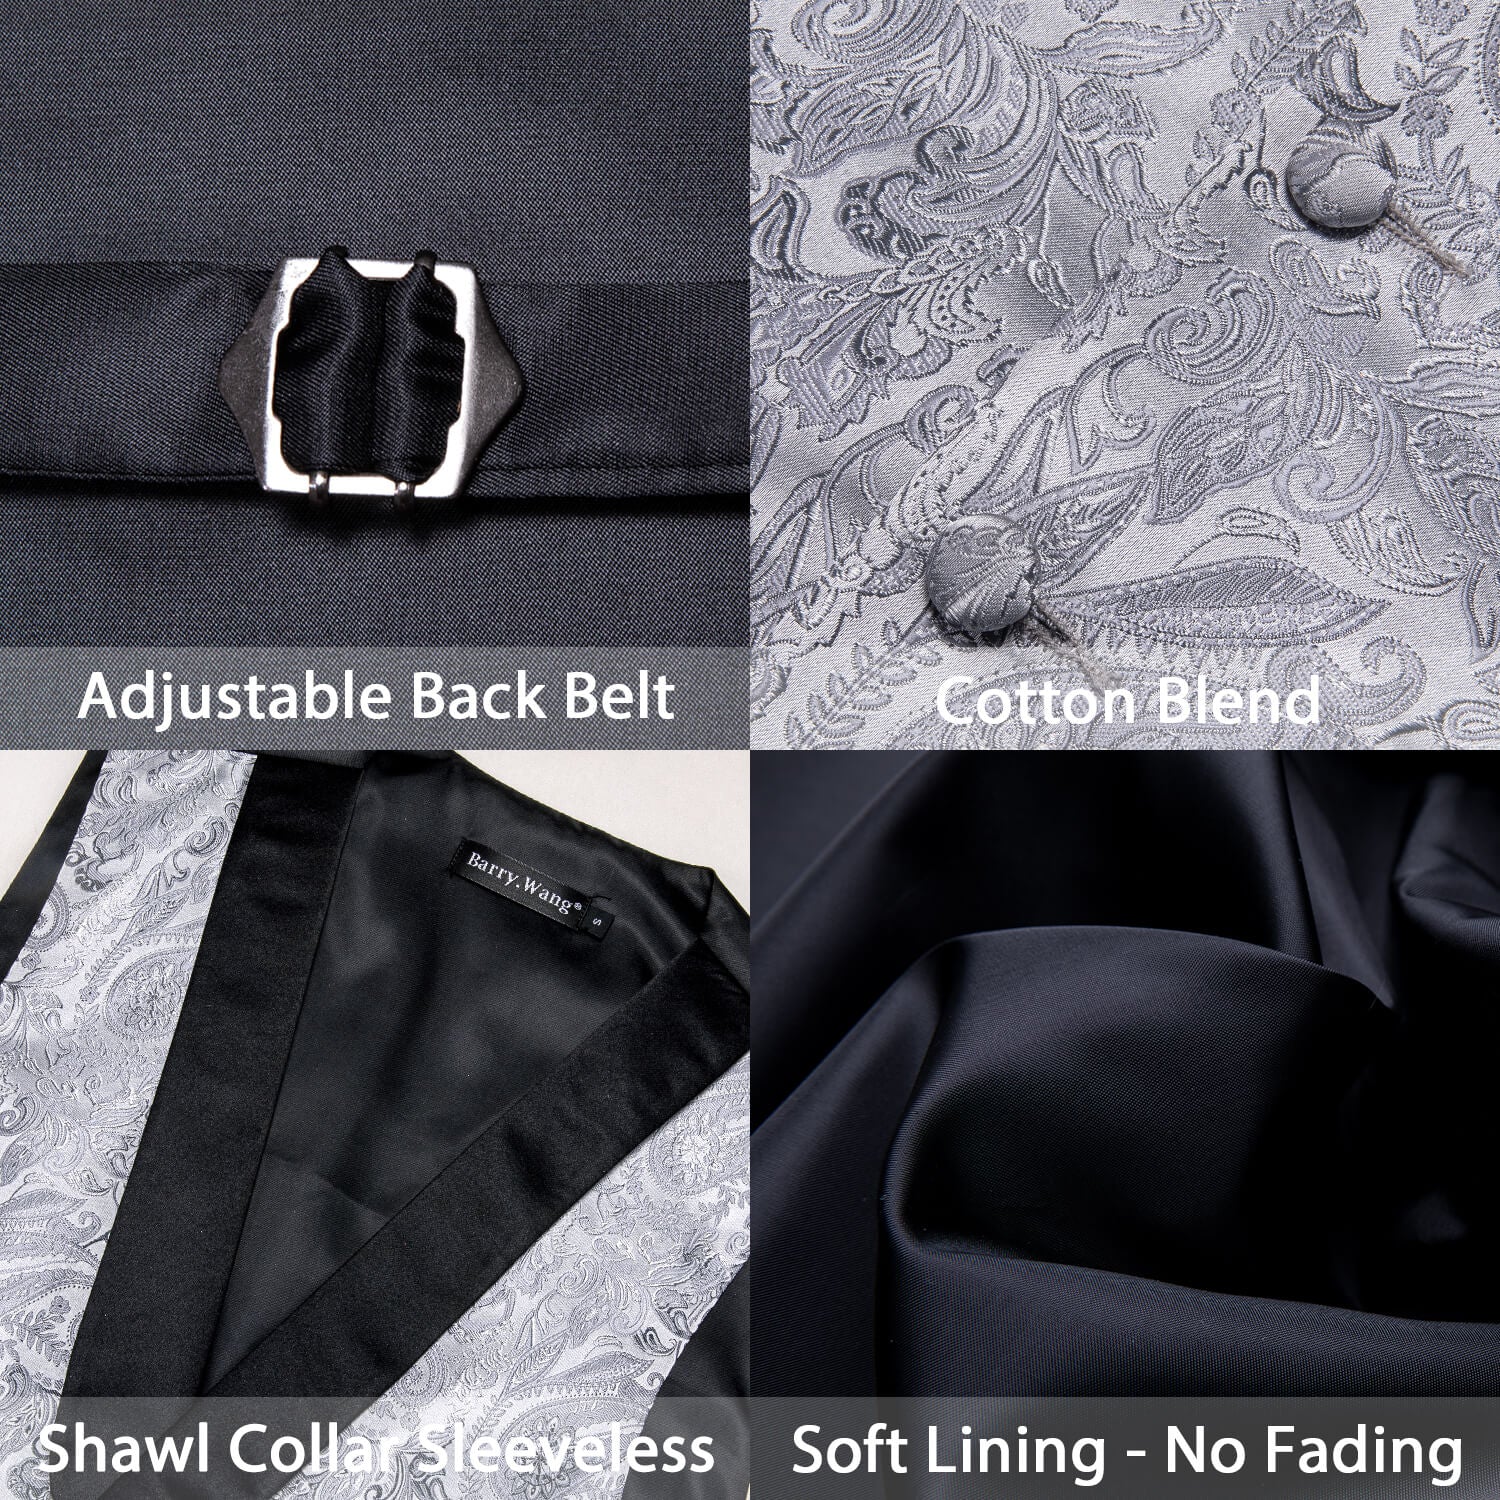 Barry.wang Shawl Collar Vest Silver Grey Paisley Men's Silk Vest Tie Hanky Cufflinks Set